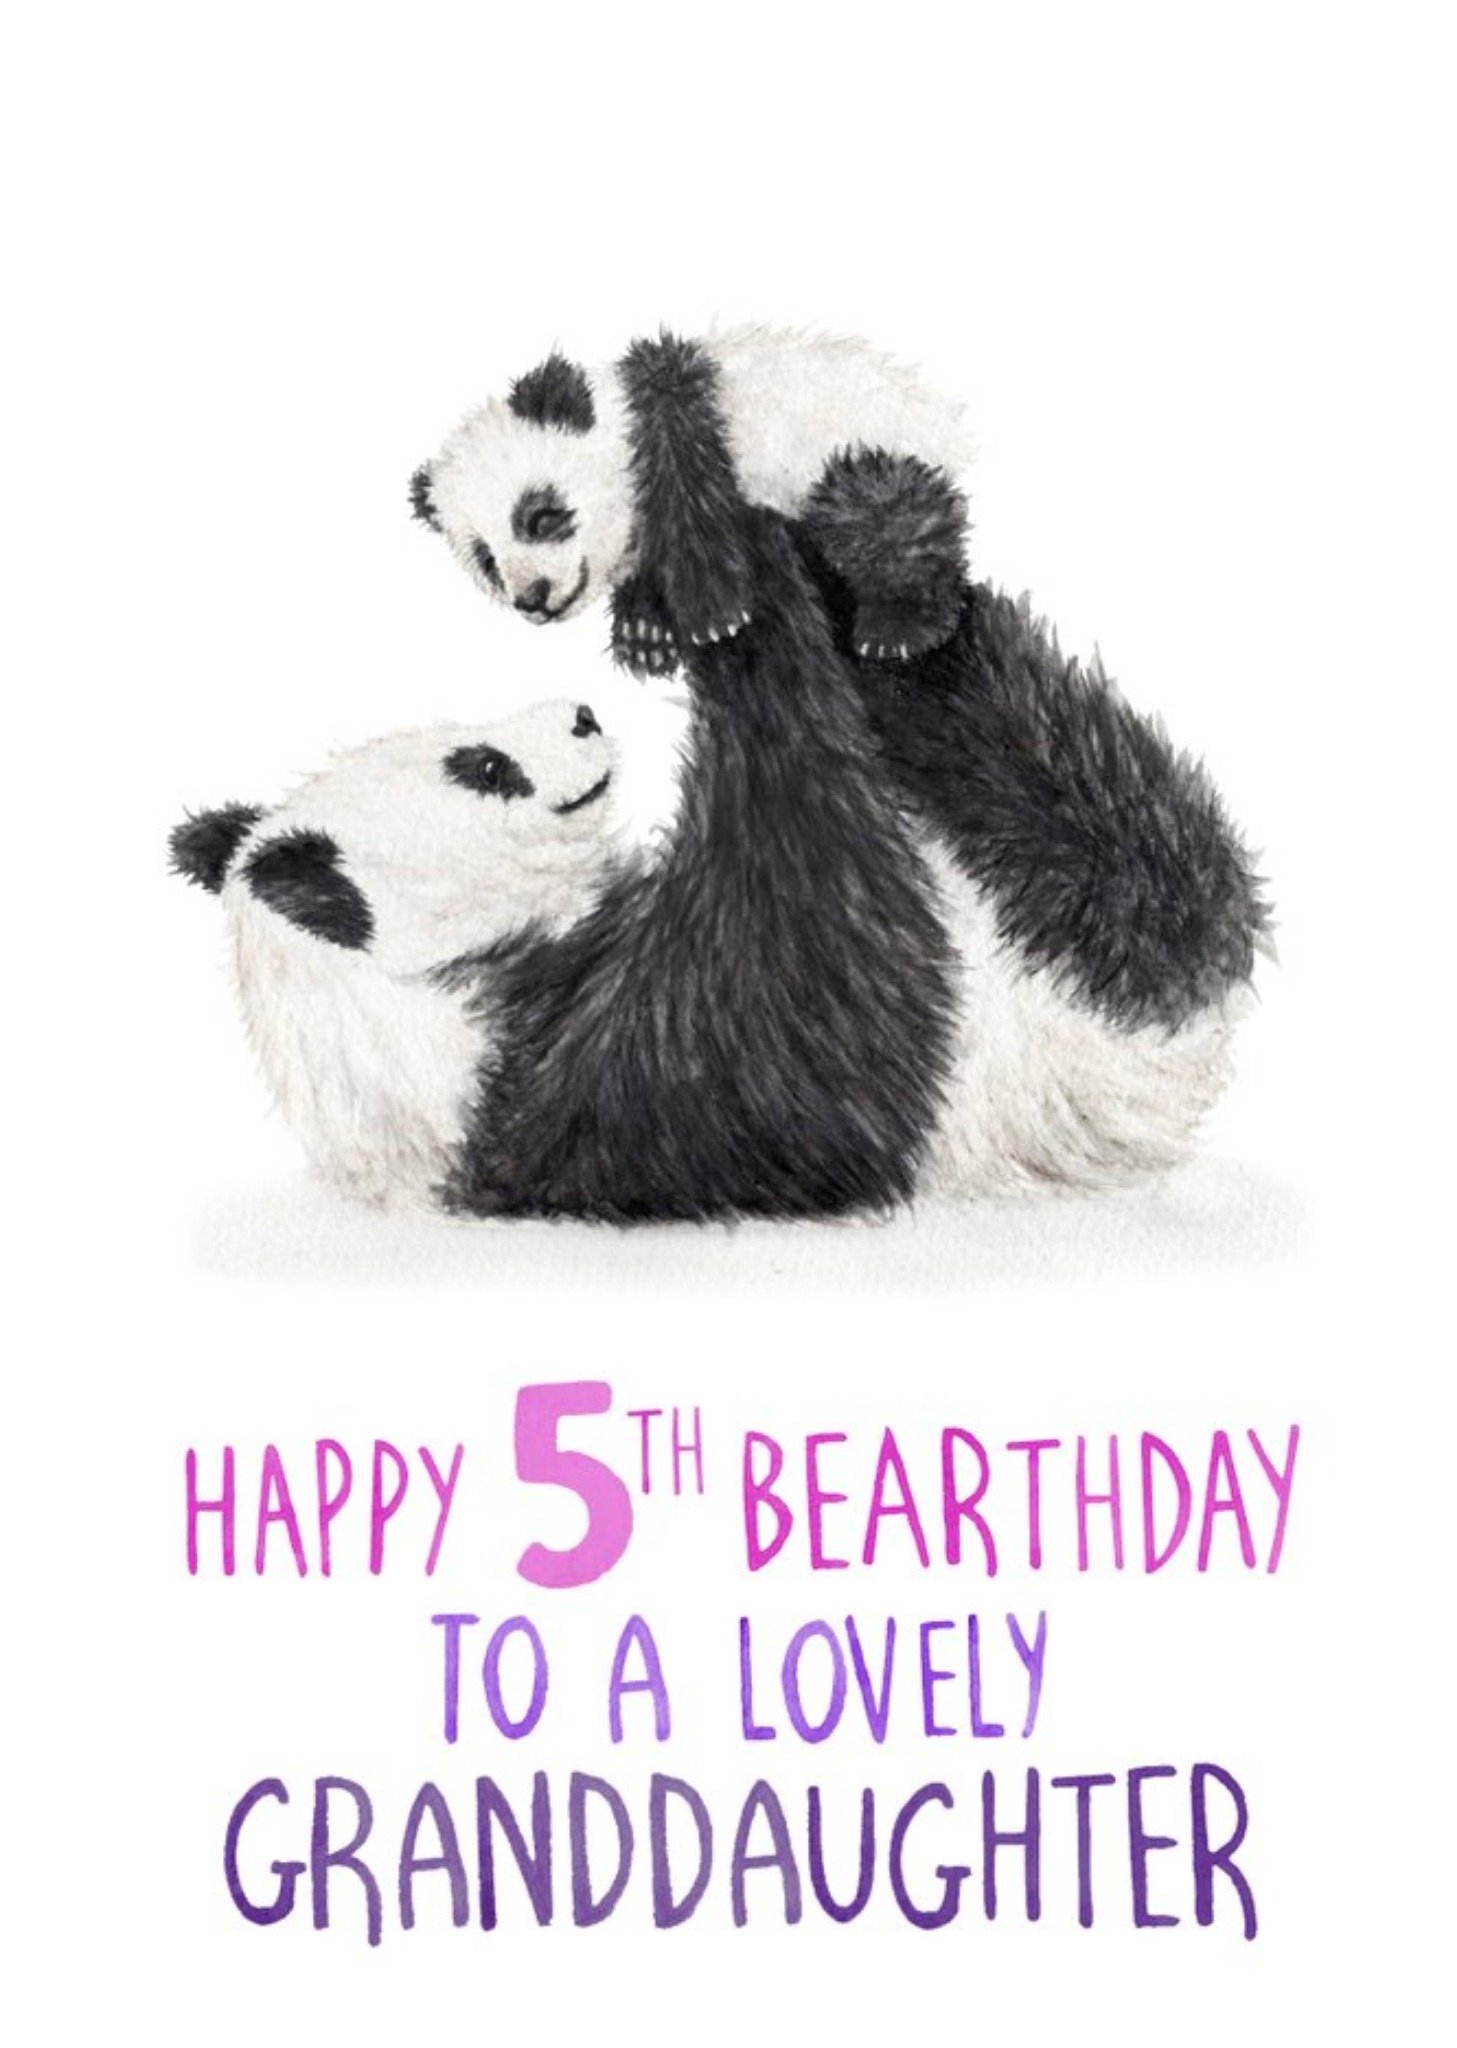 Moonpig Cute Pandas Happy 5th Bearthday Granddaughter Birthday Card Ecard